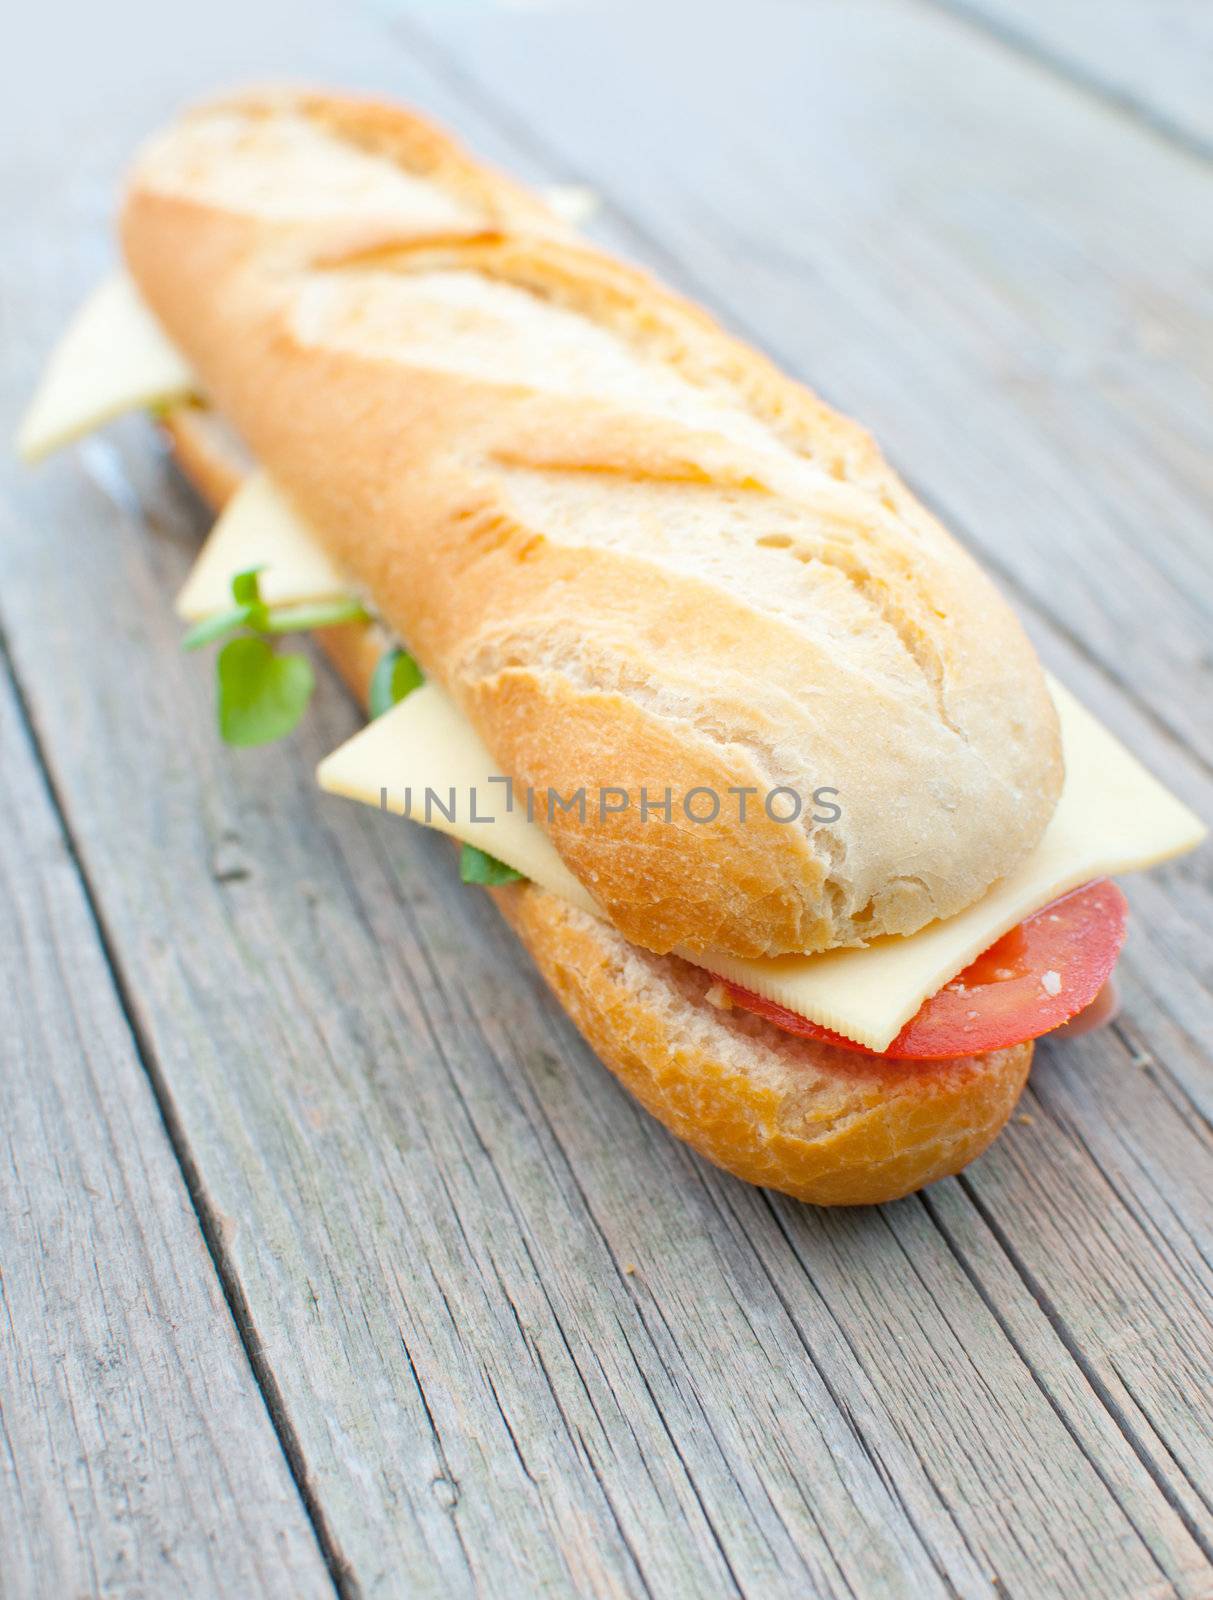 Sub sandwich by unikpix